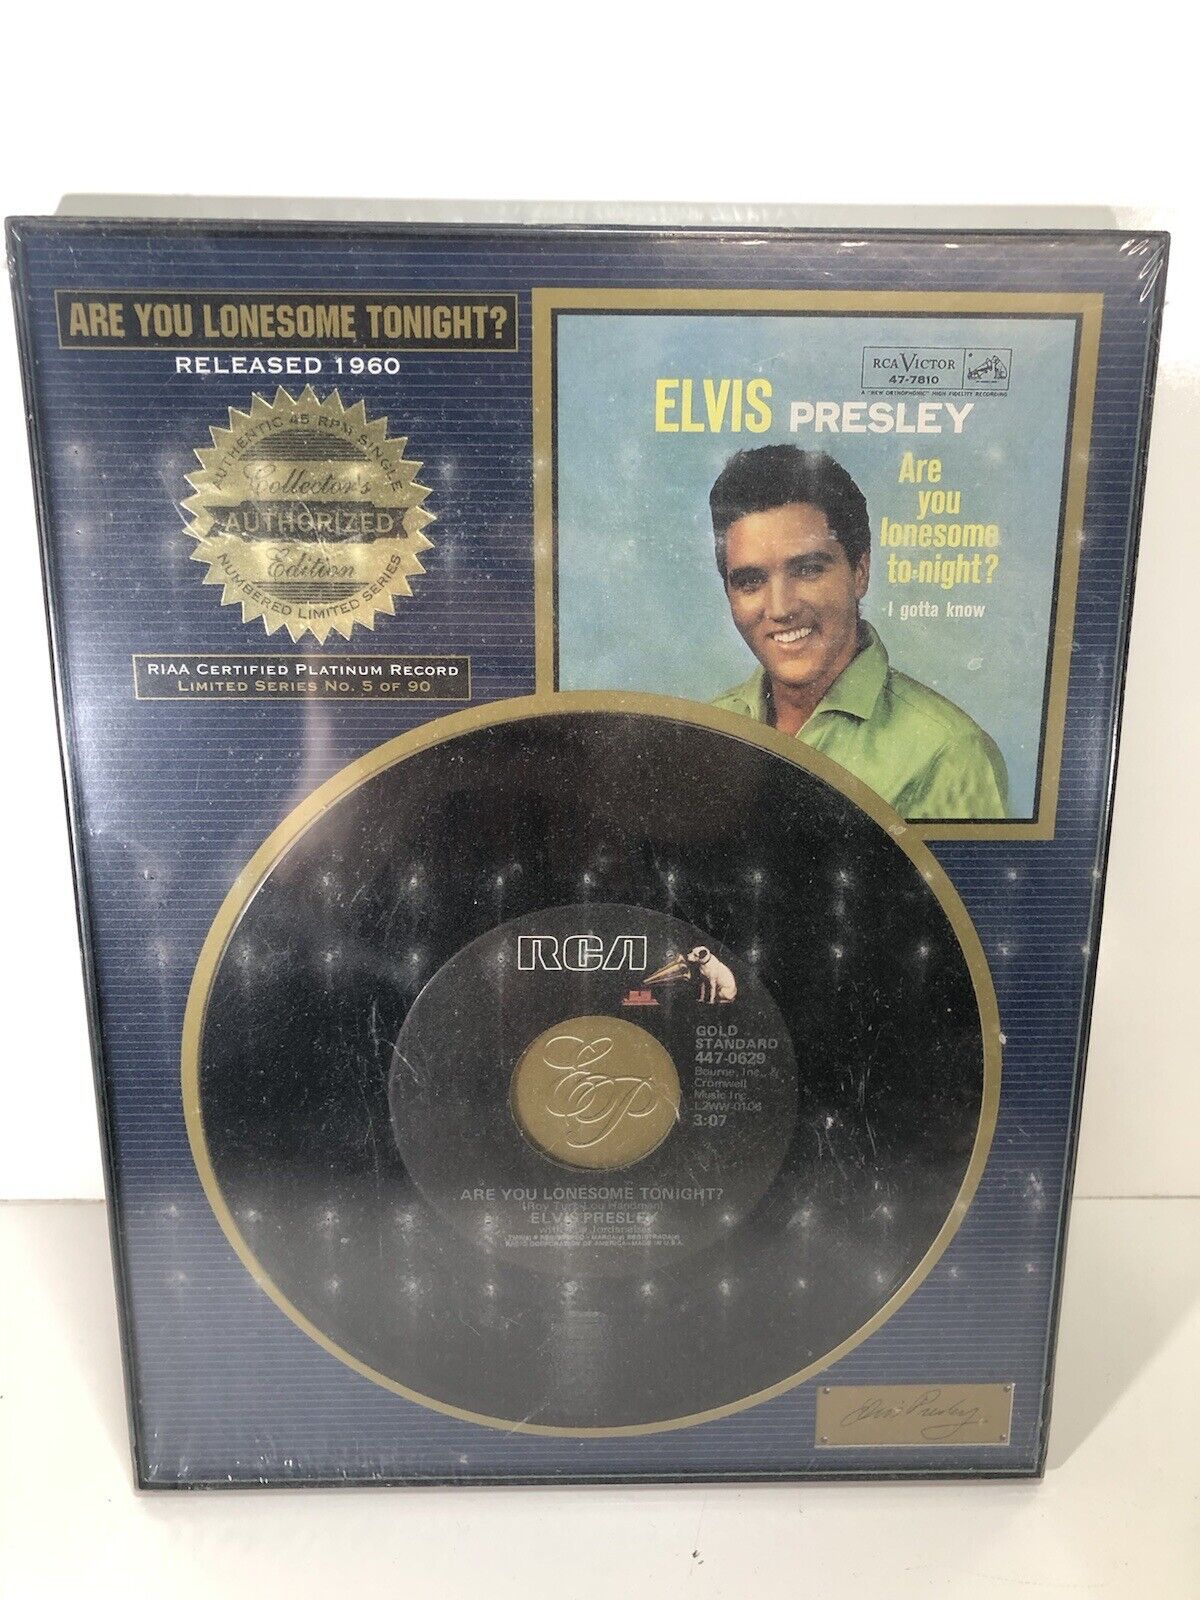 Limited Elvis Presley Collectors Edition 45 RPM Single Plaque-Lonesome Tonight